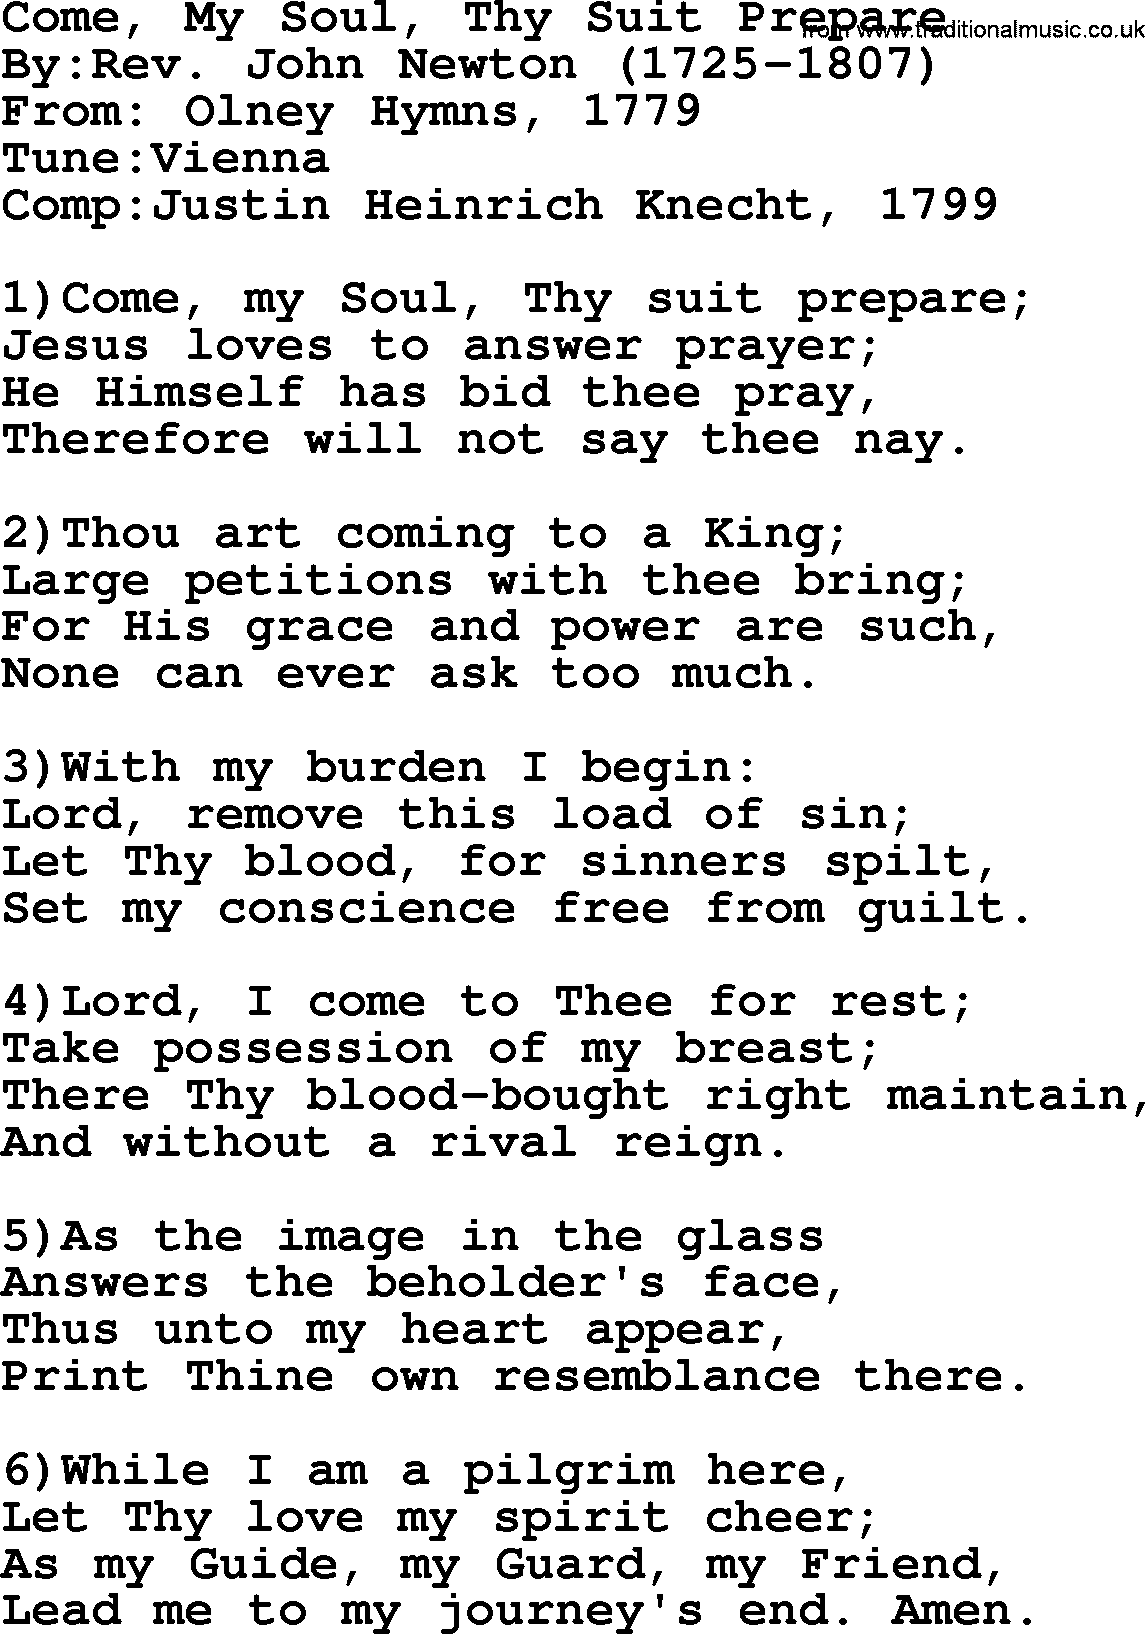 Methodist Hymn: Come, My Soul, Thy Suit Prepare, lyrics